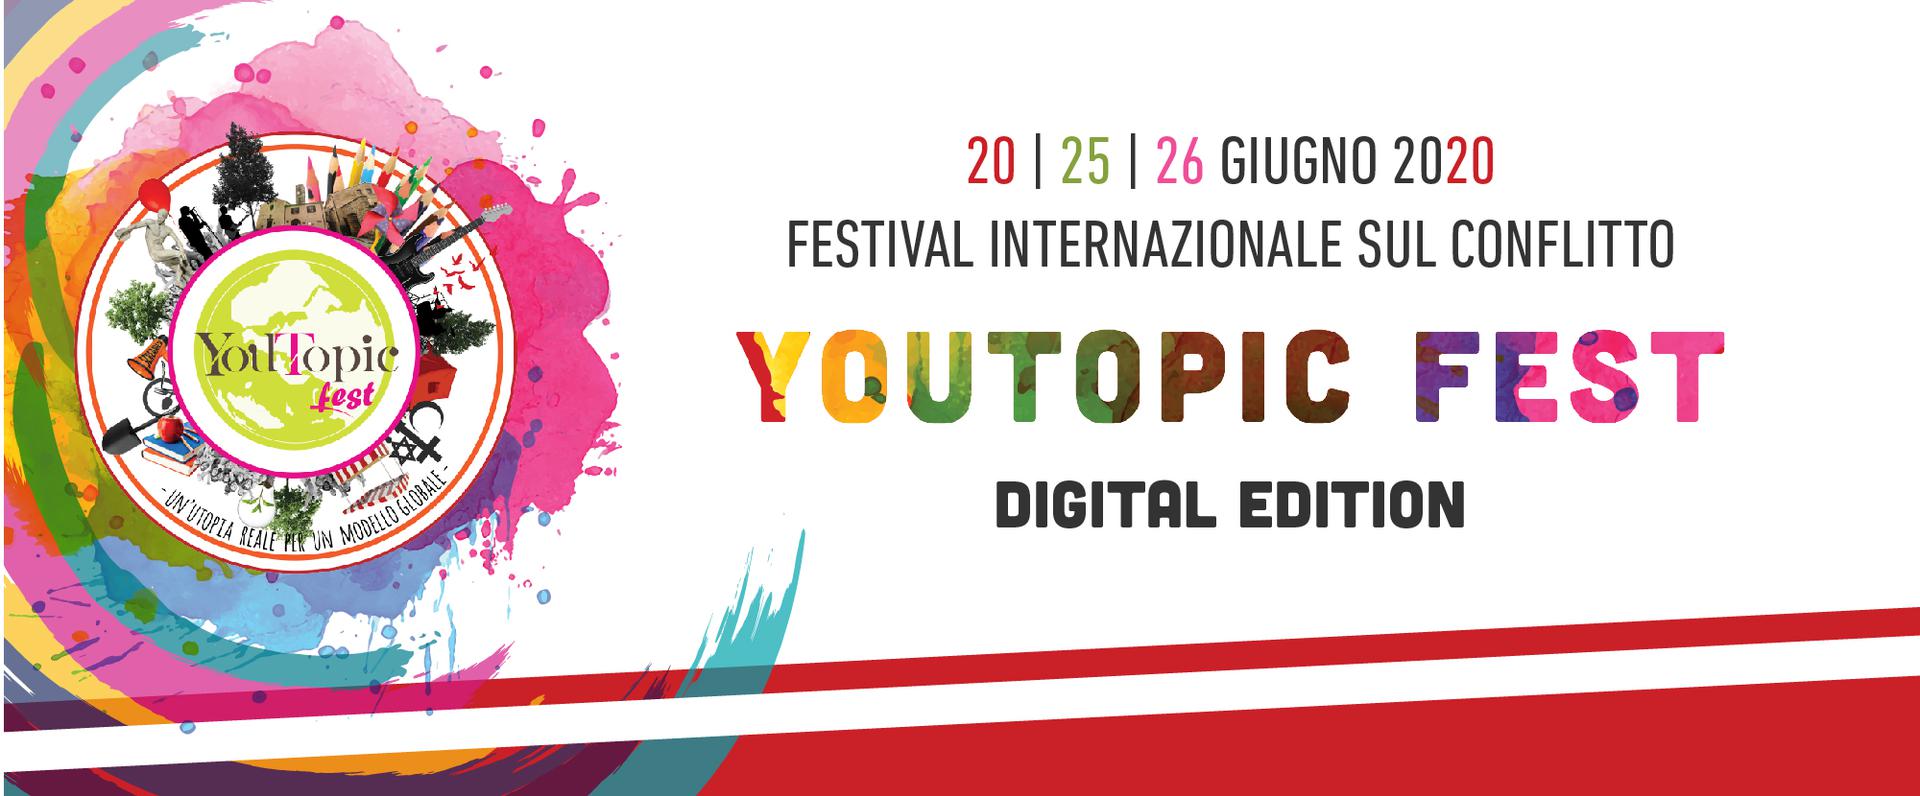 Rondine: arriva YouTopic Fest 2020 Digital Edition!